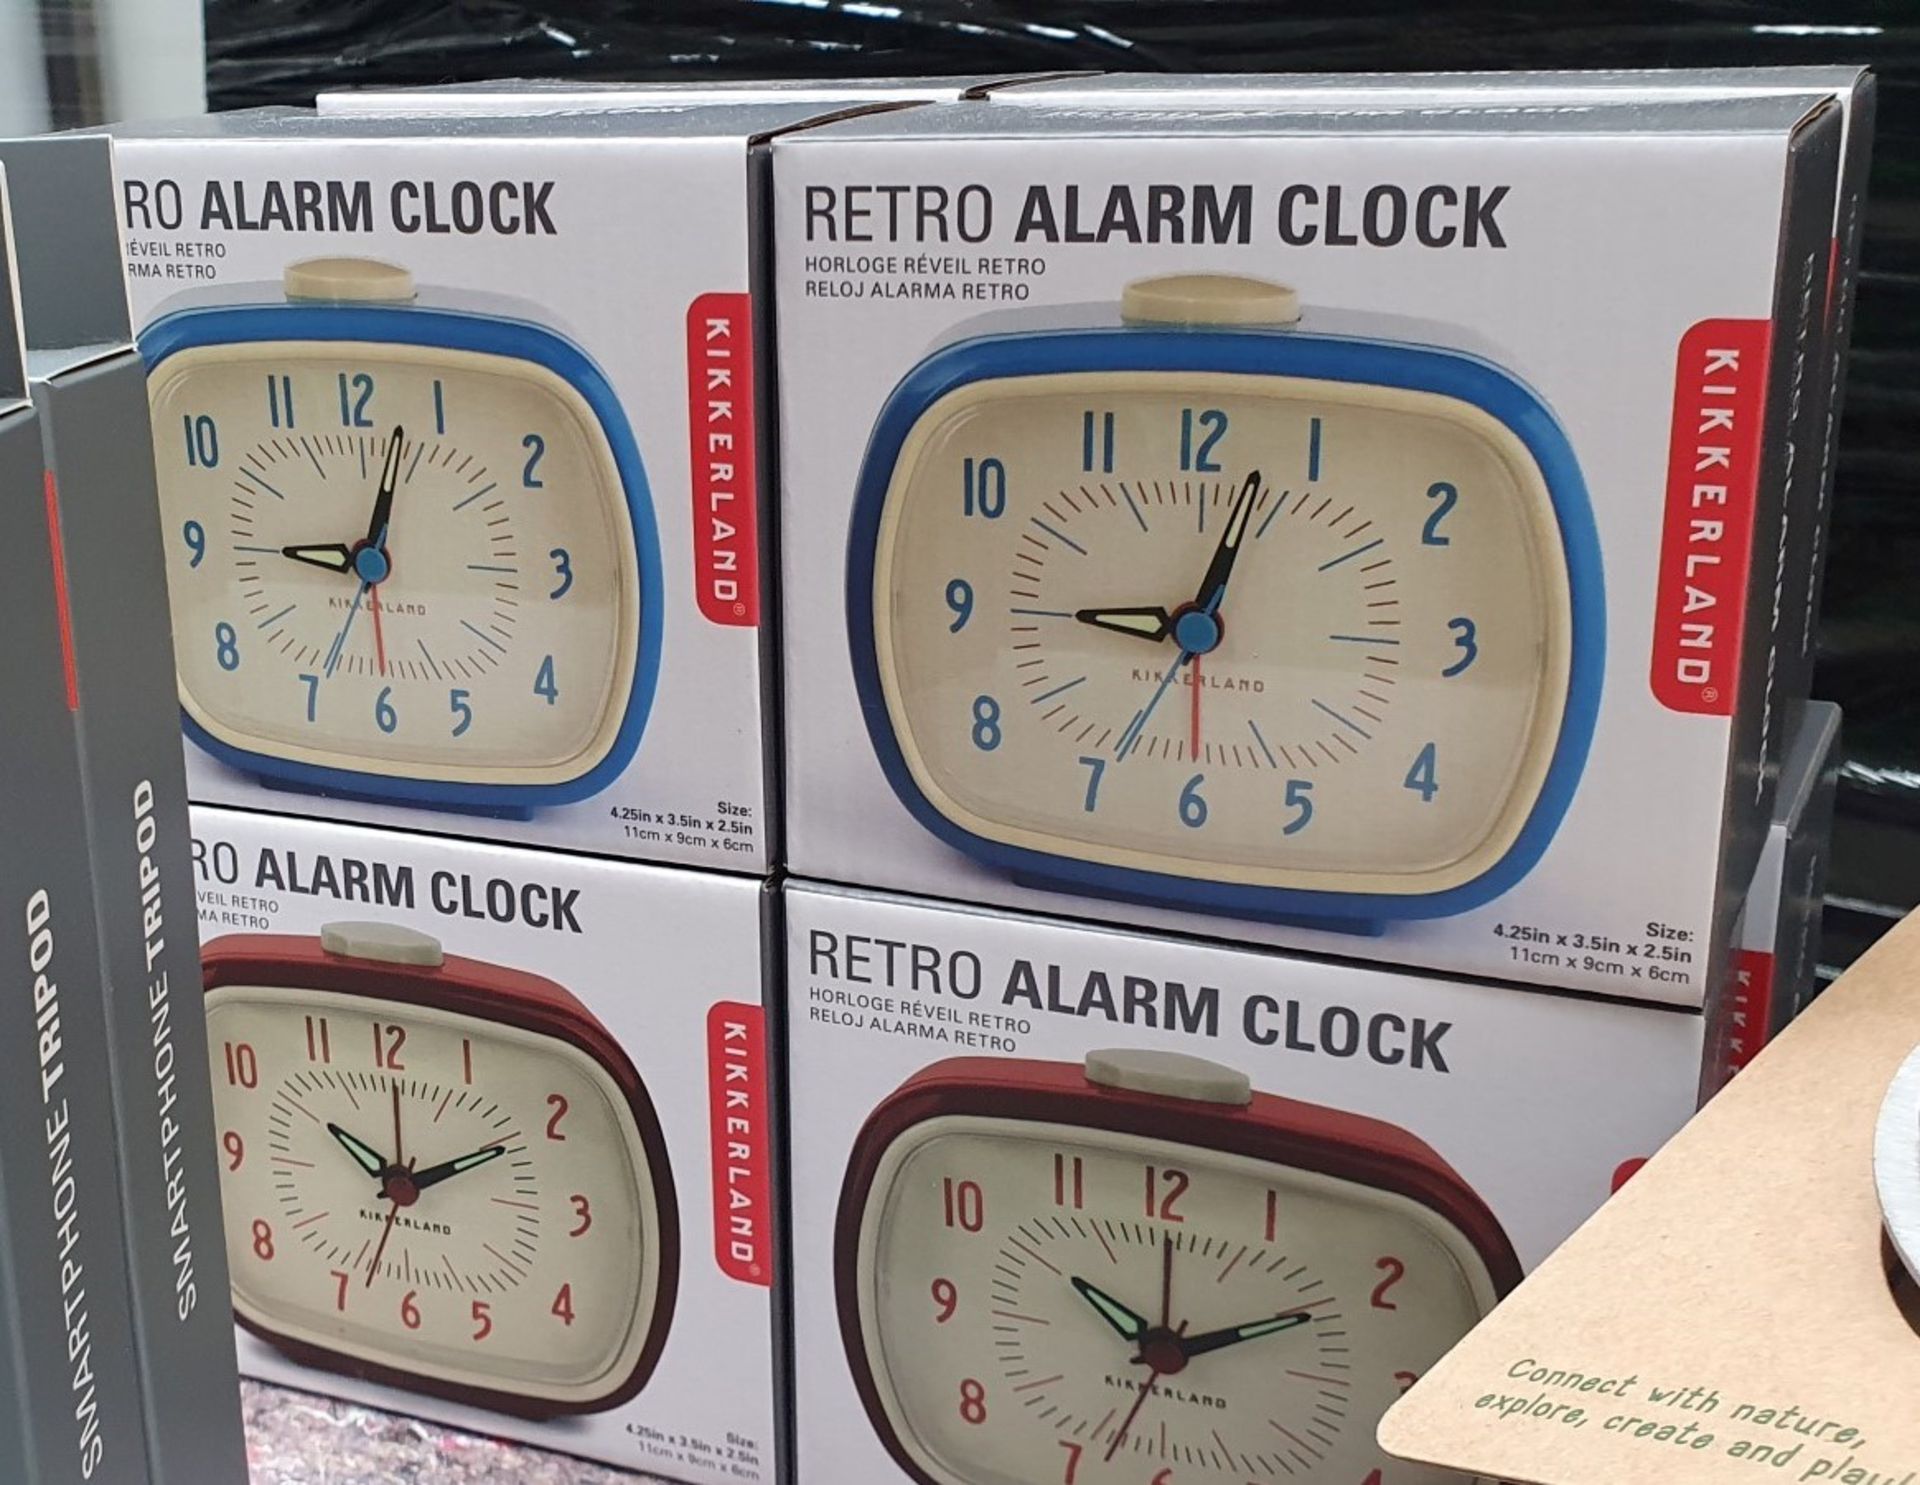 8 x Kikkerland Retro Alarm Clocks - New Stock - Ref: TCH223 - CL840 - Location: Altrincham WA14